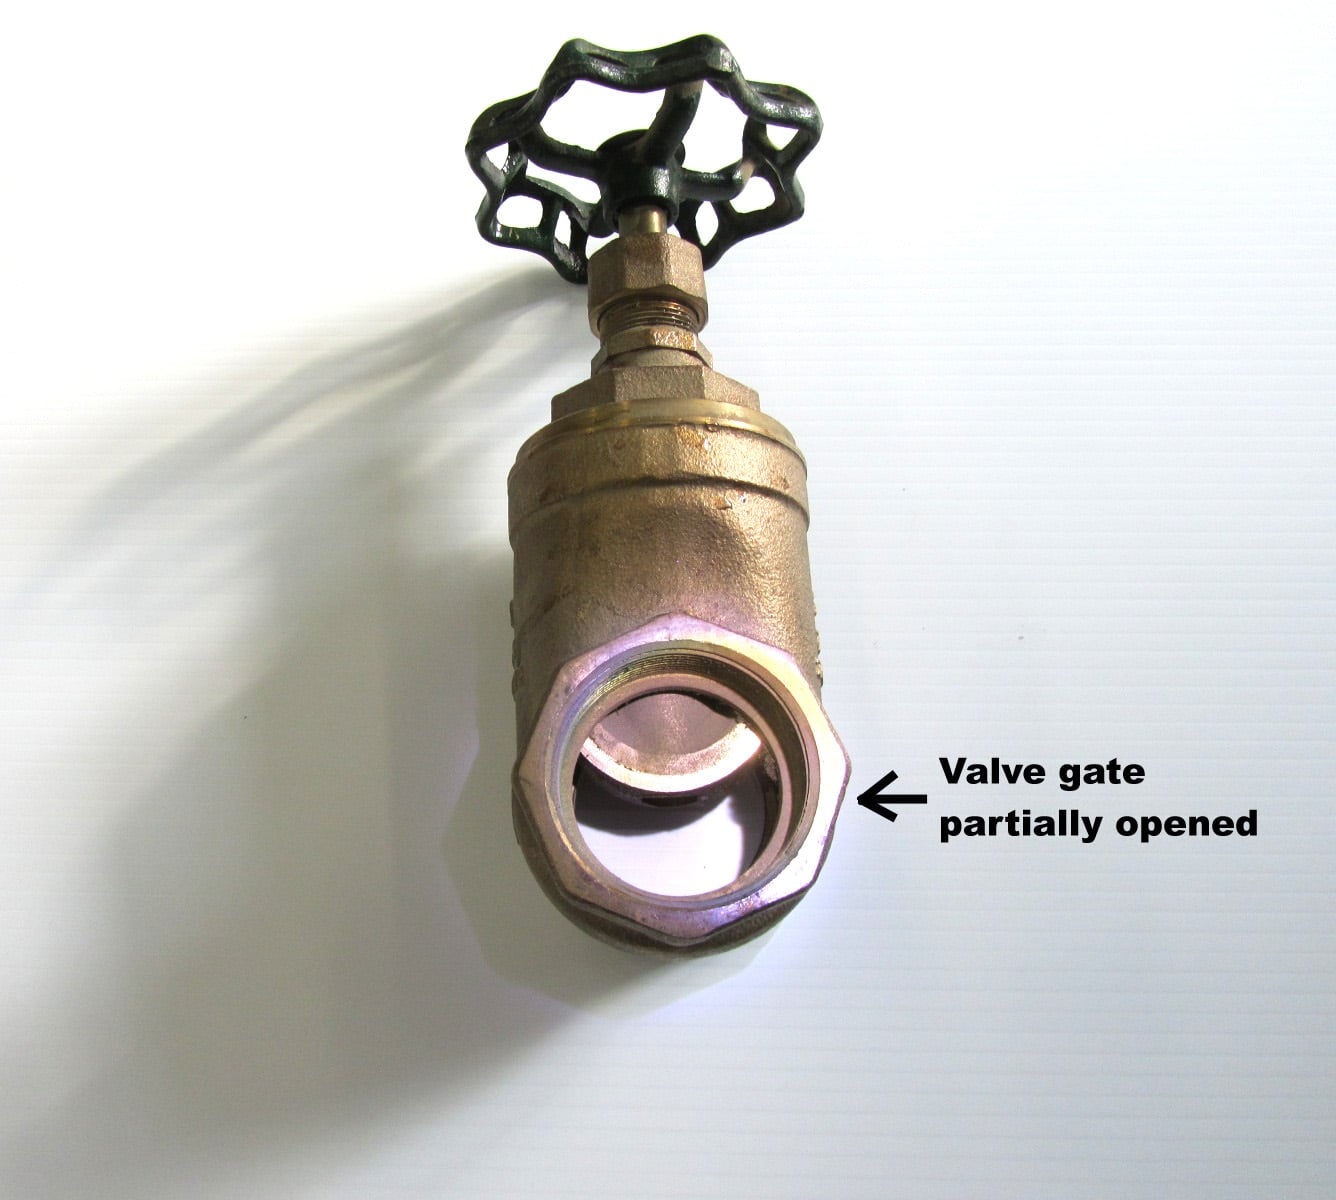 Main control valve